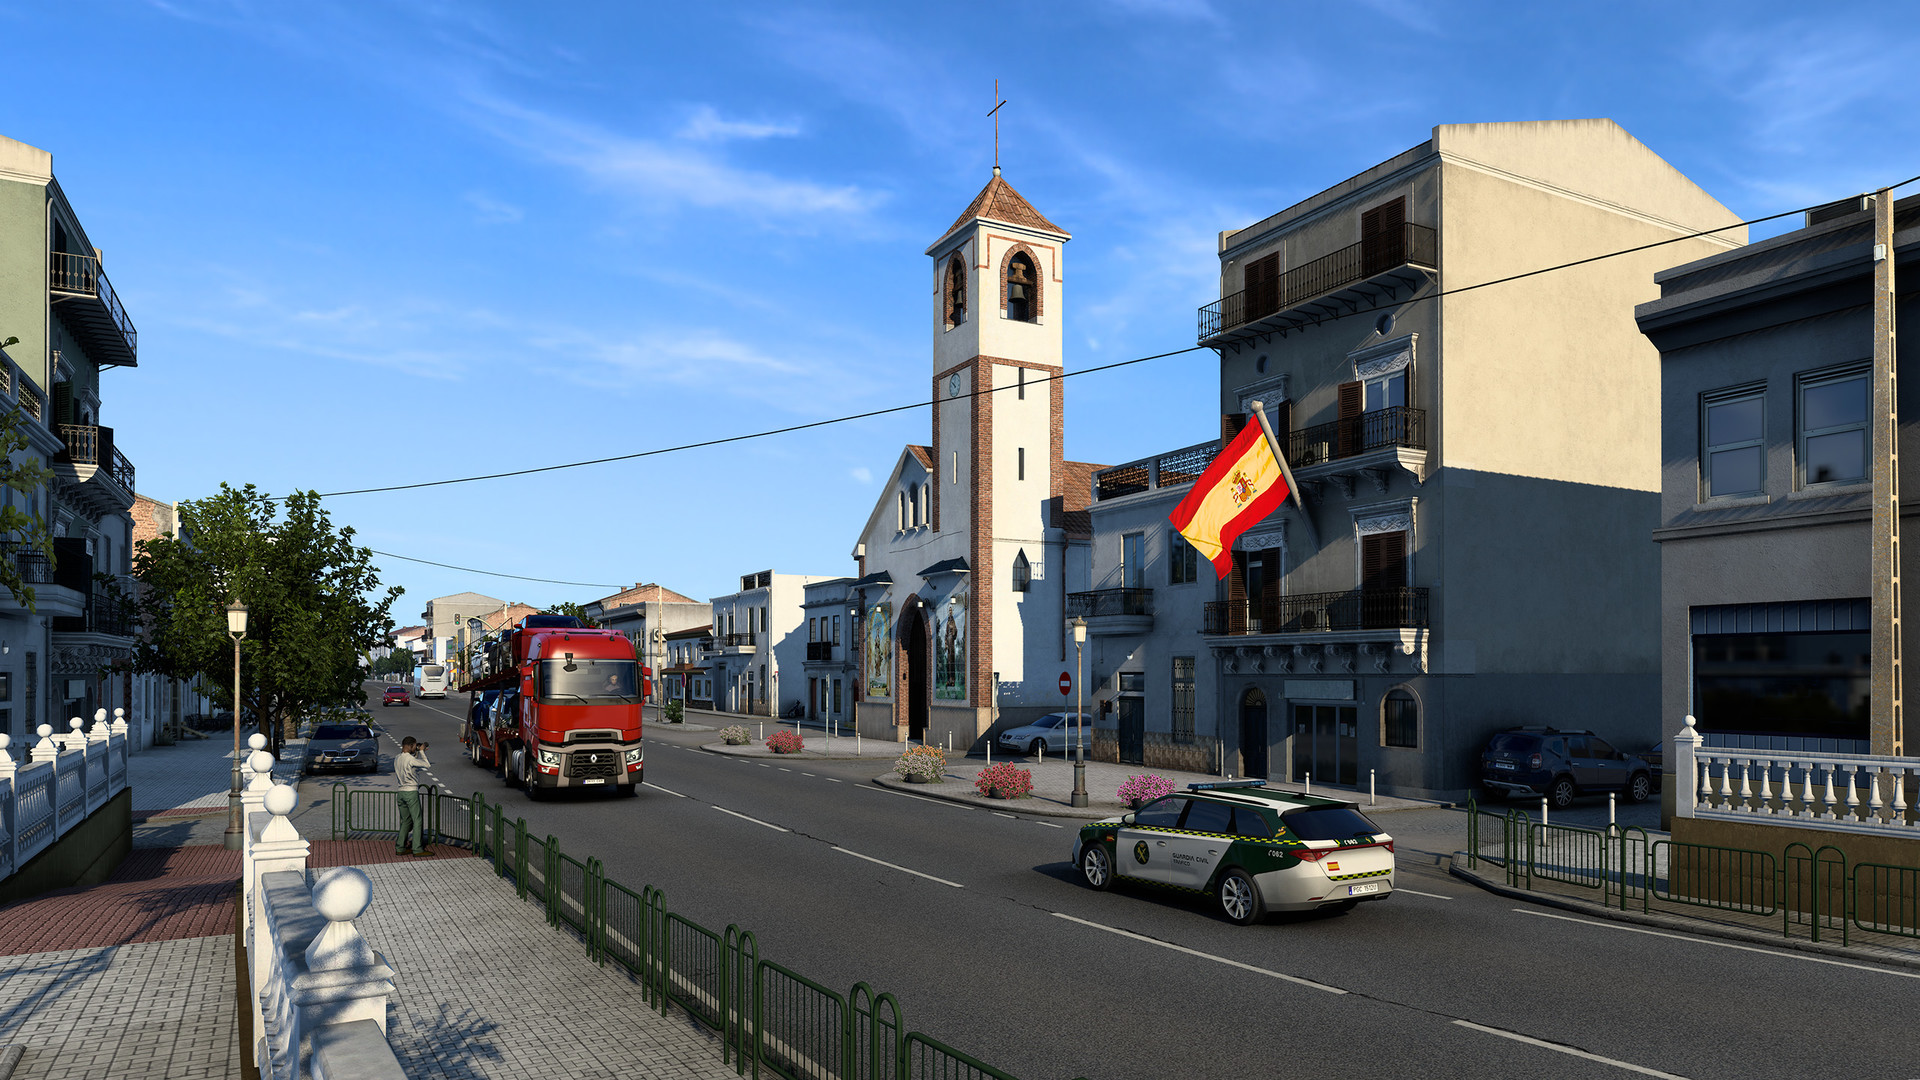 Euro Truck Simulator 2 - Iberia DLC EU Steam CD Key